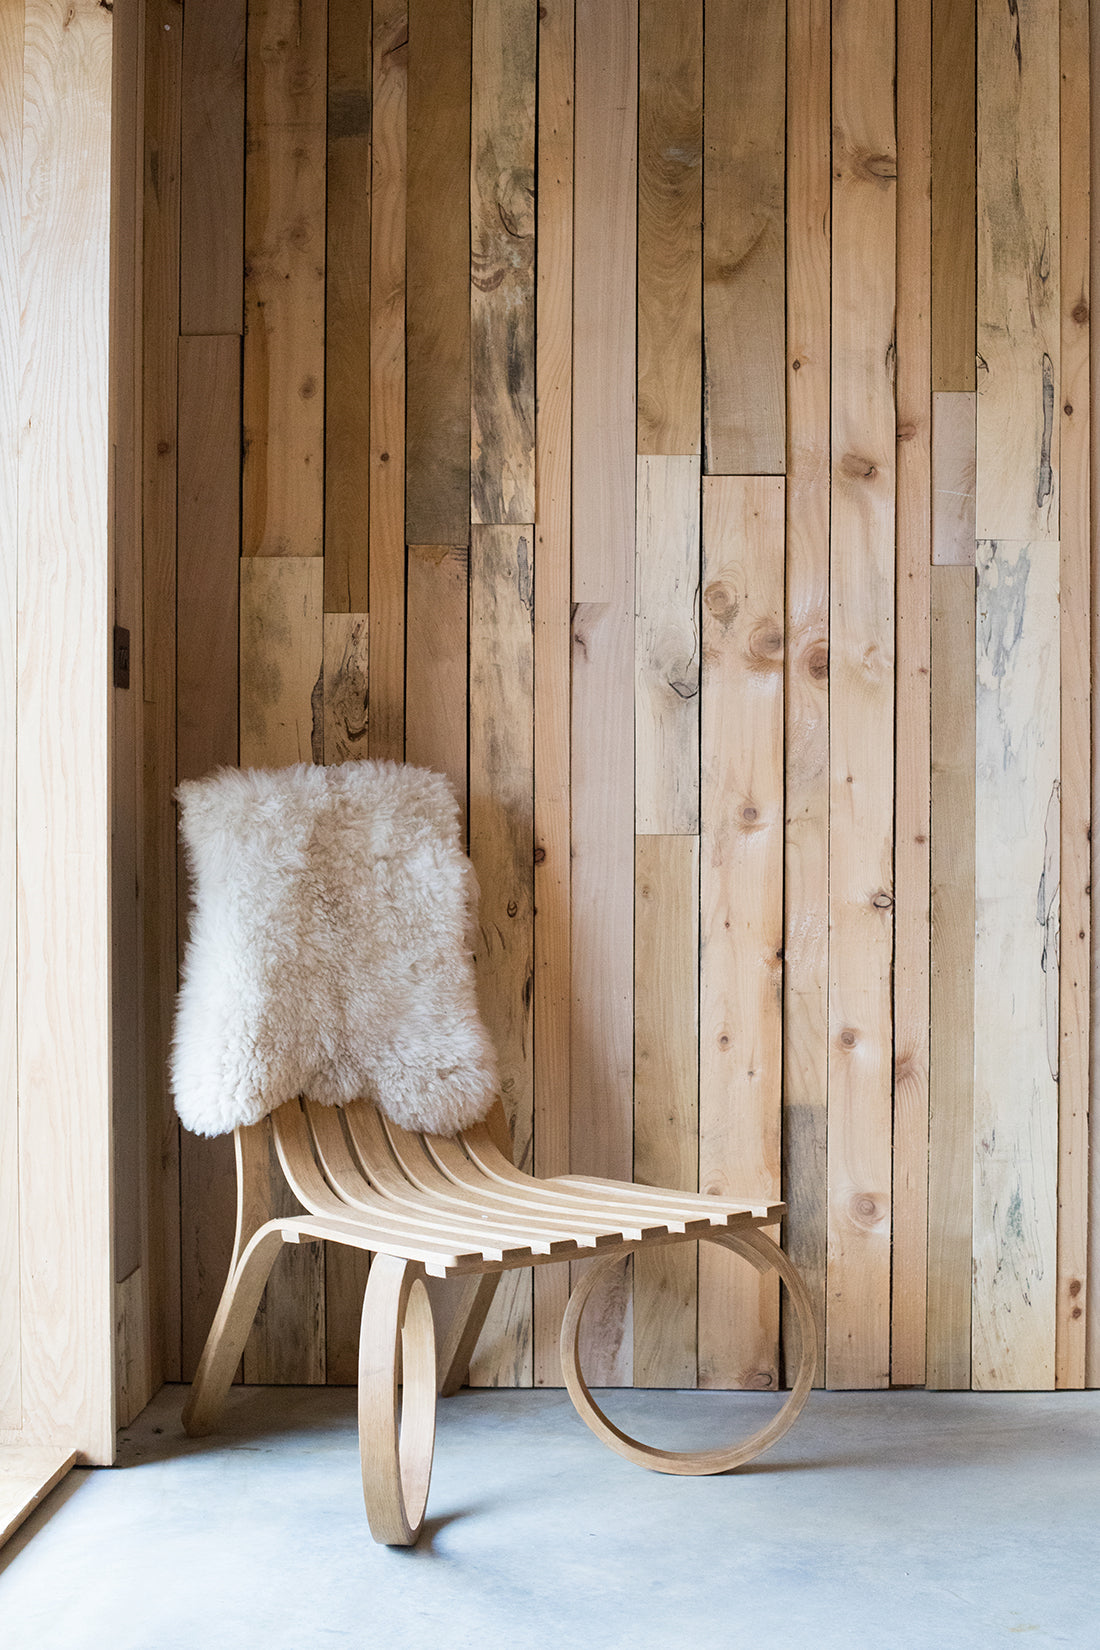 Steam bent wooden chair with sheepskin rug